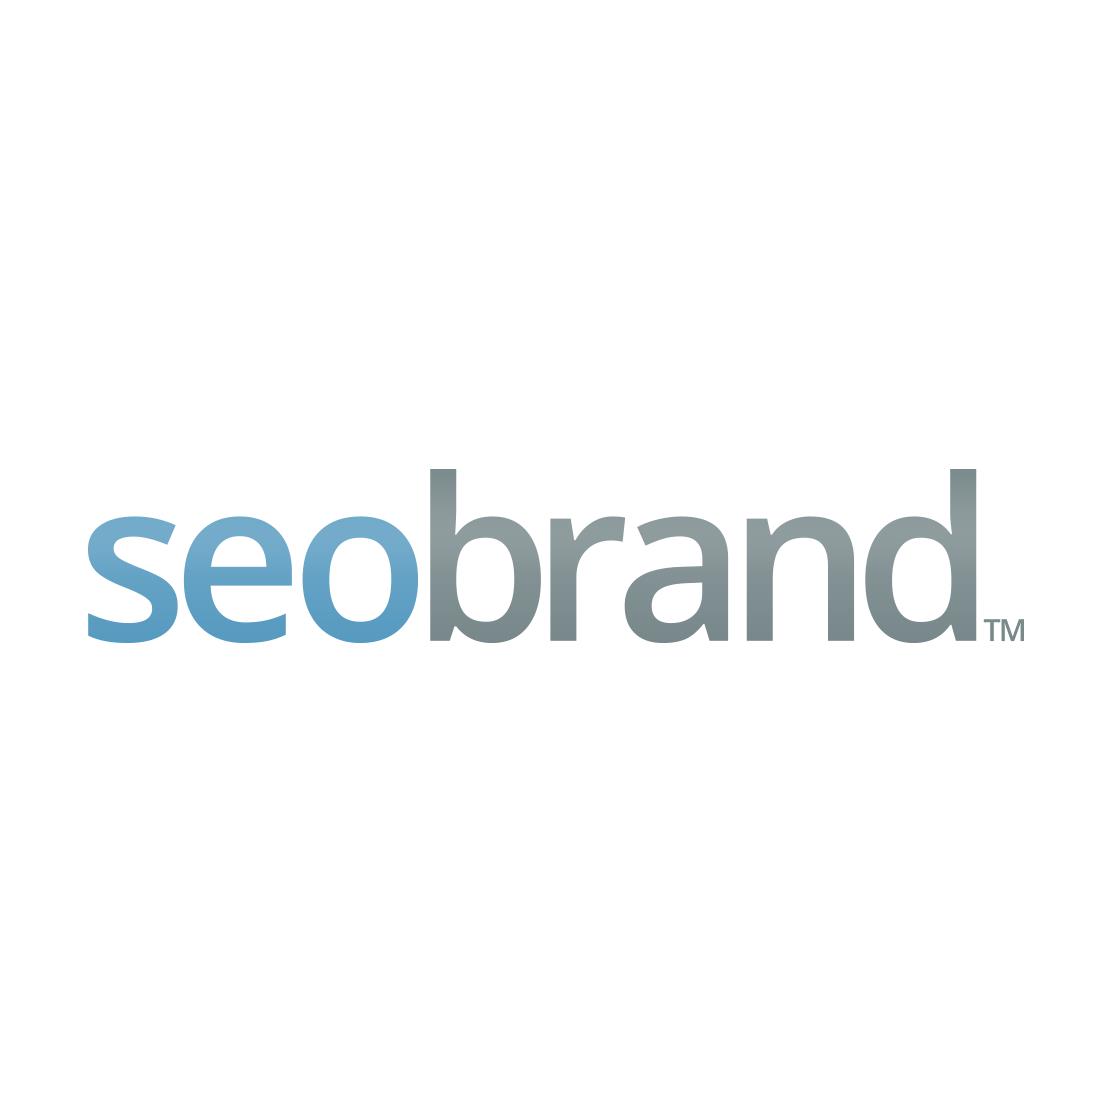 Top Real Estate SEO Agency Logo: SEO Brand